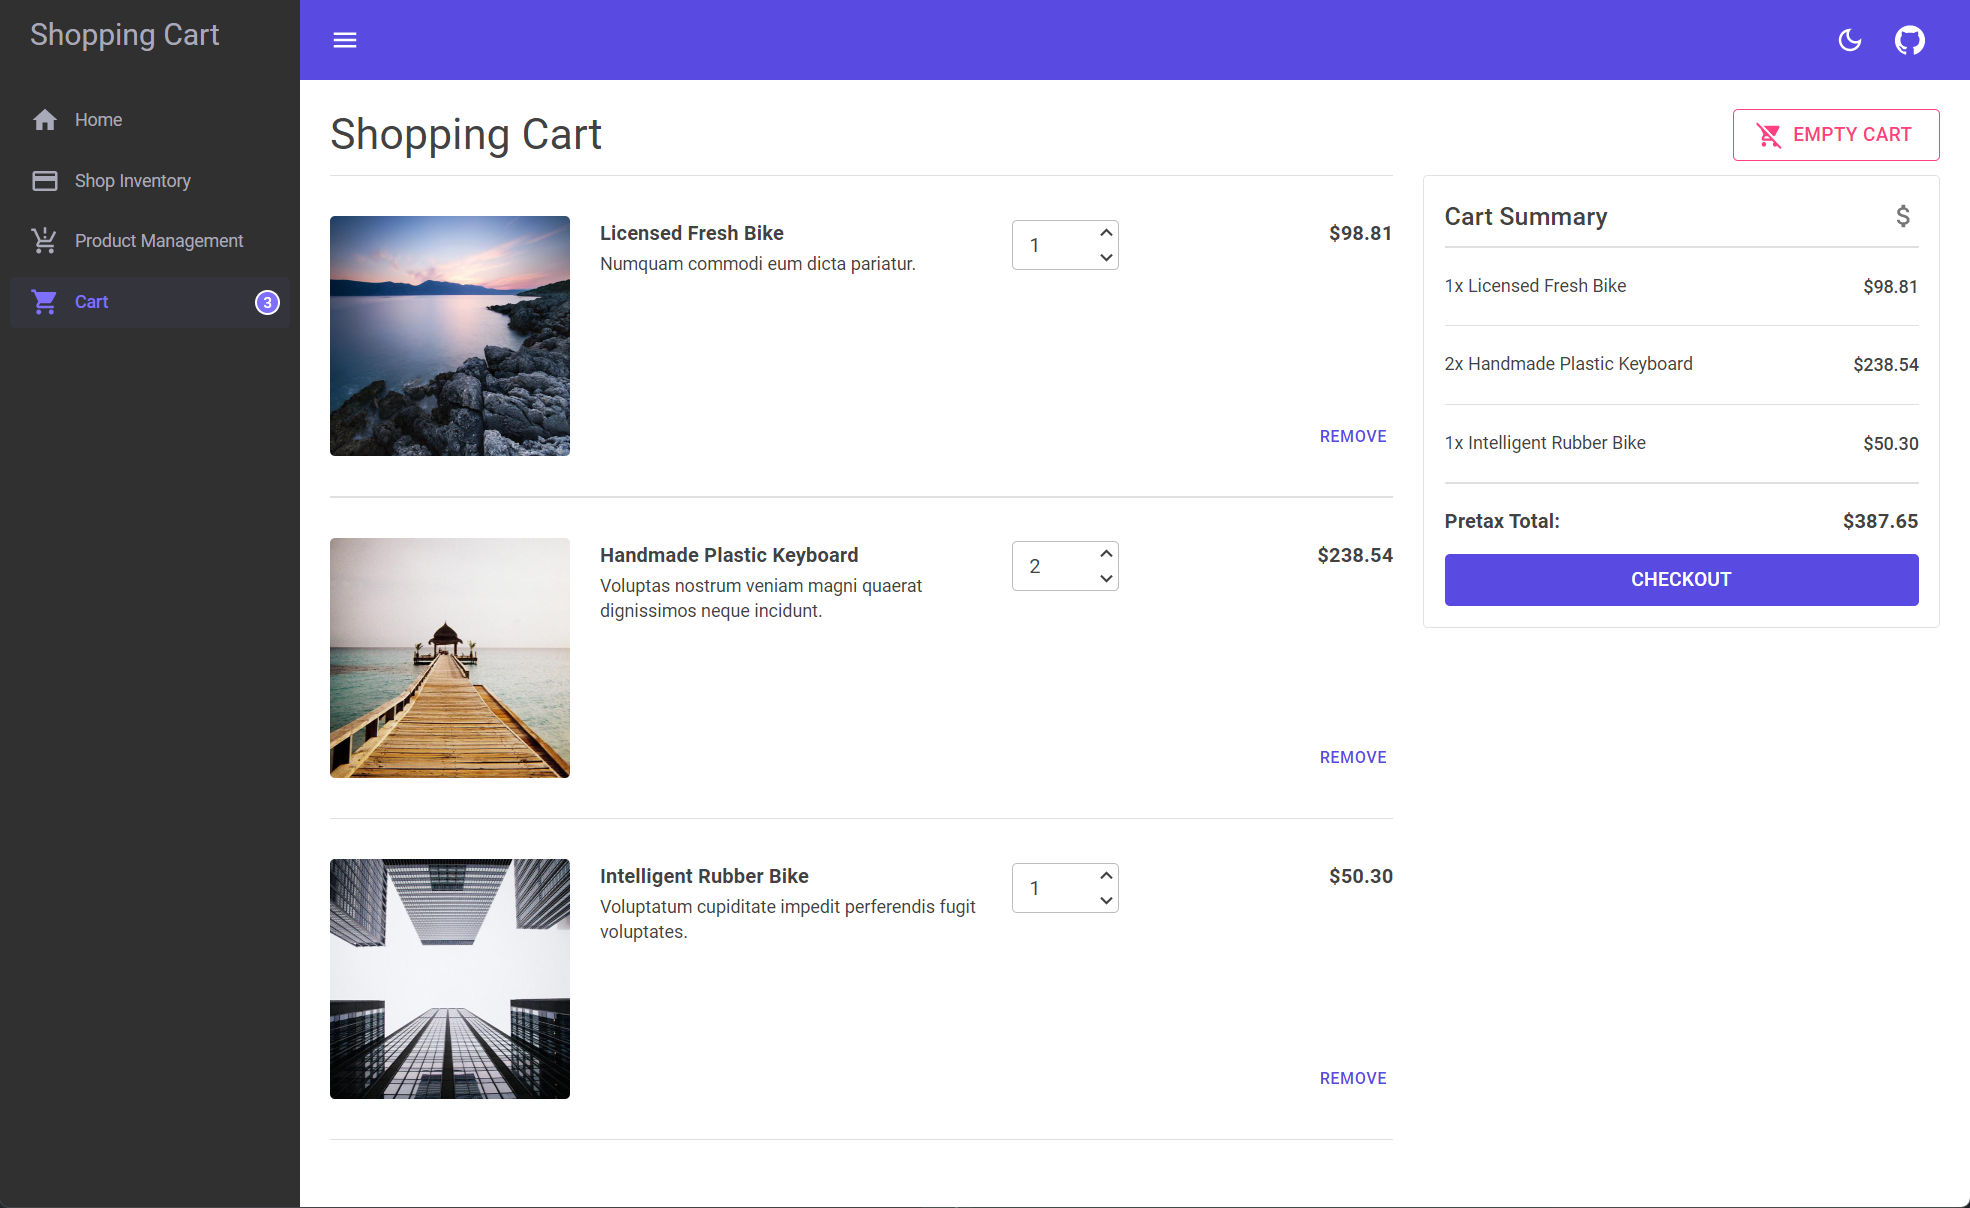 Shopping Cart sample app running.